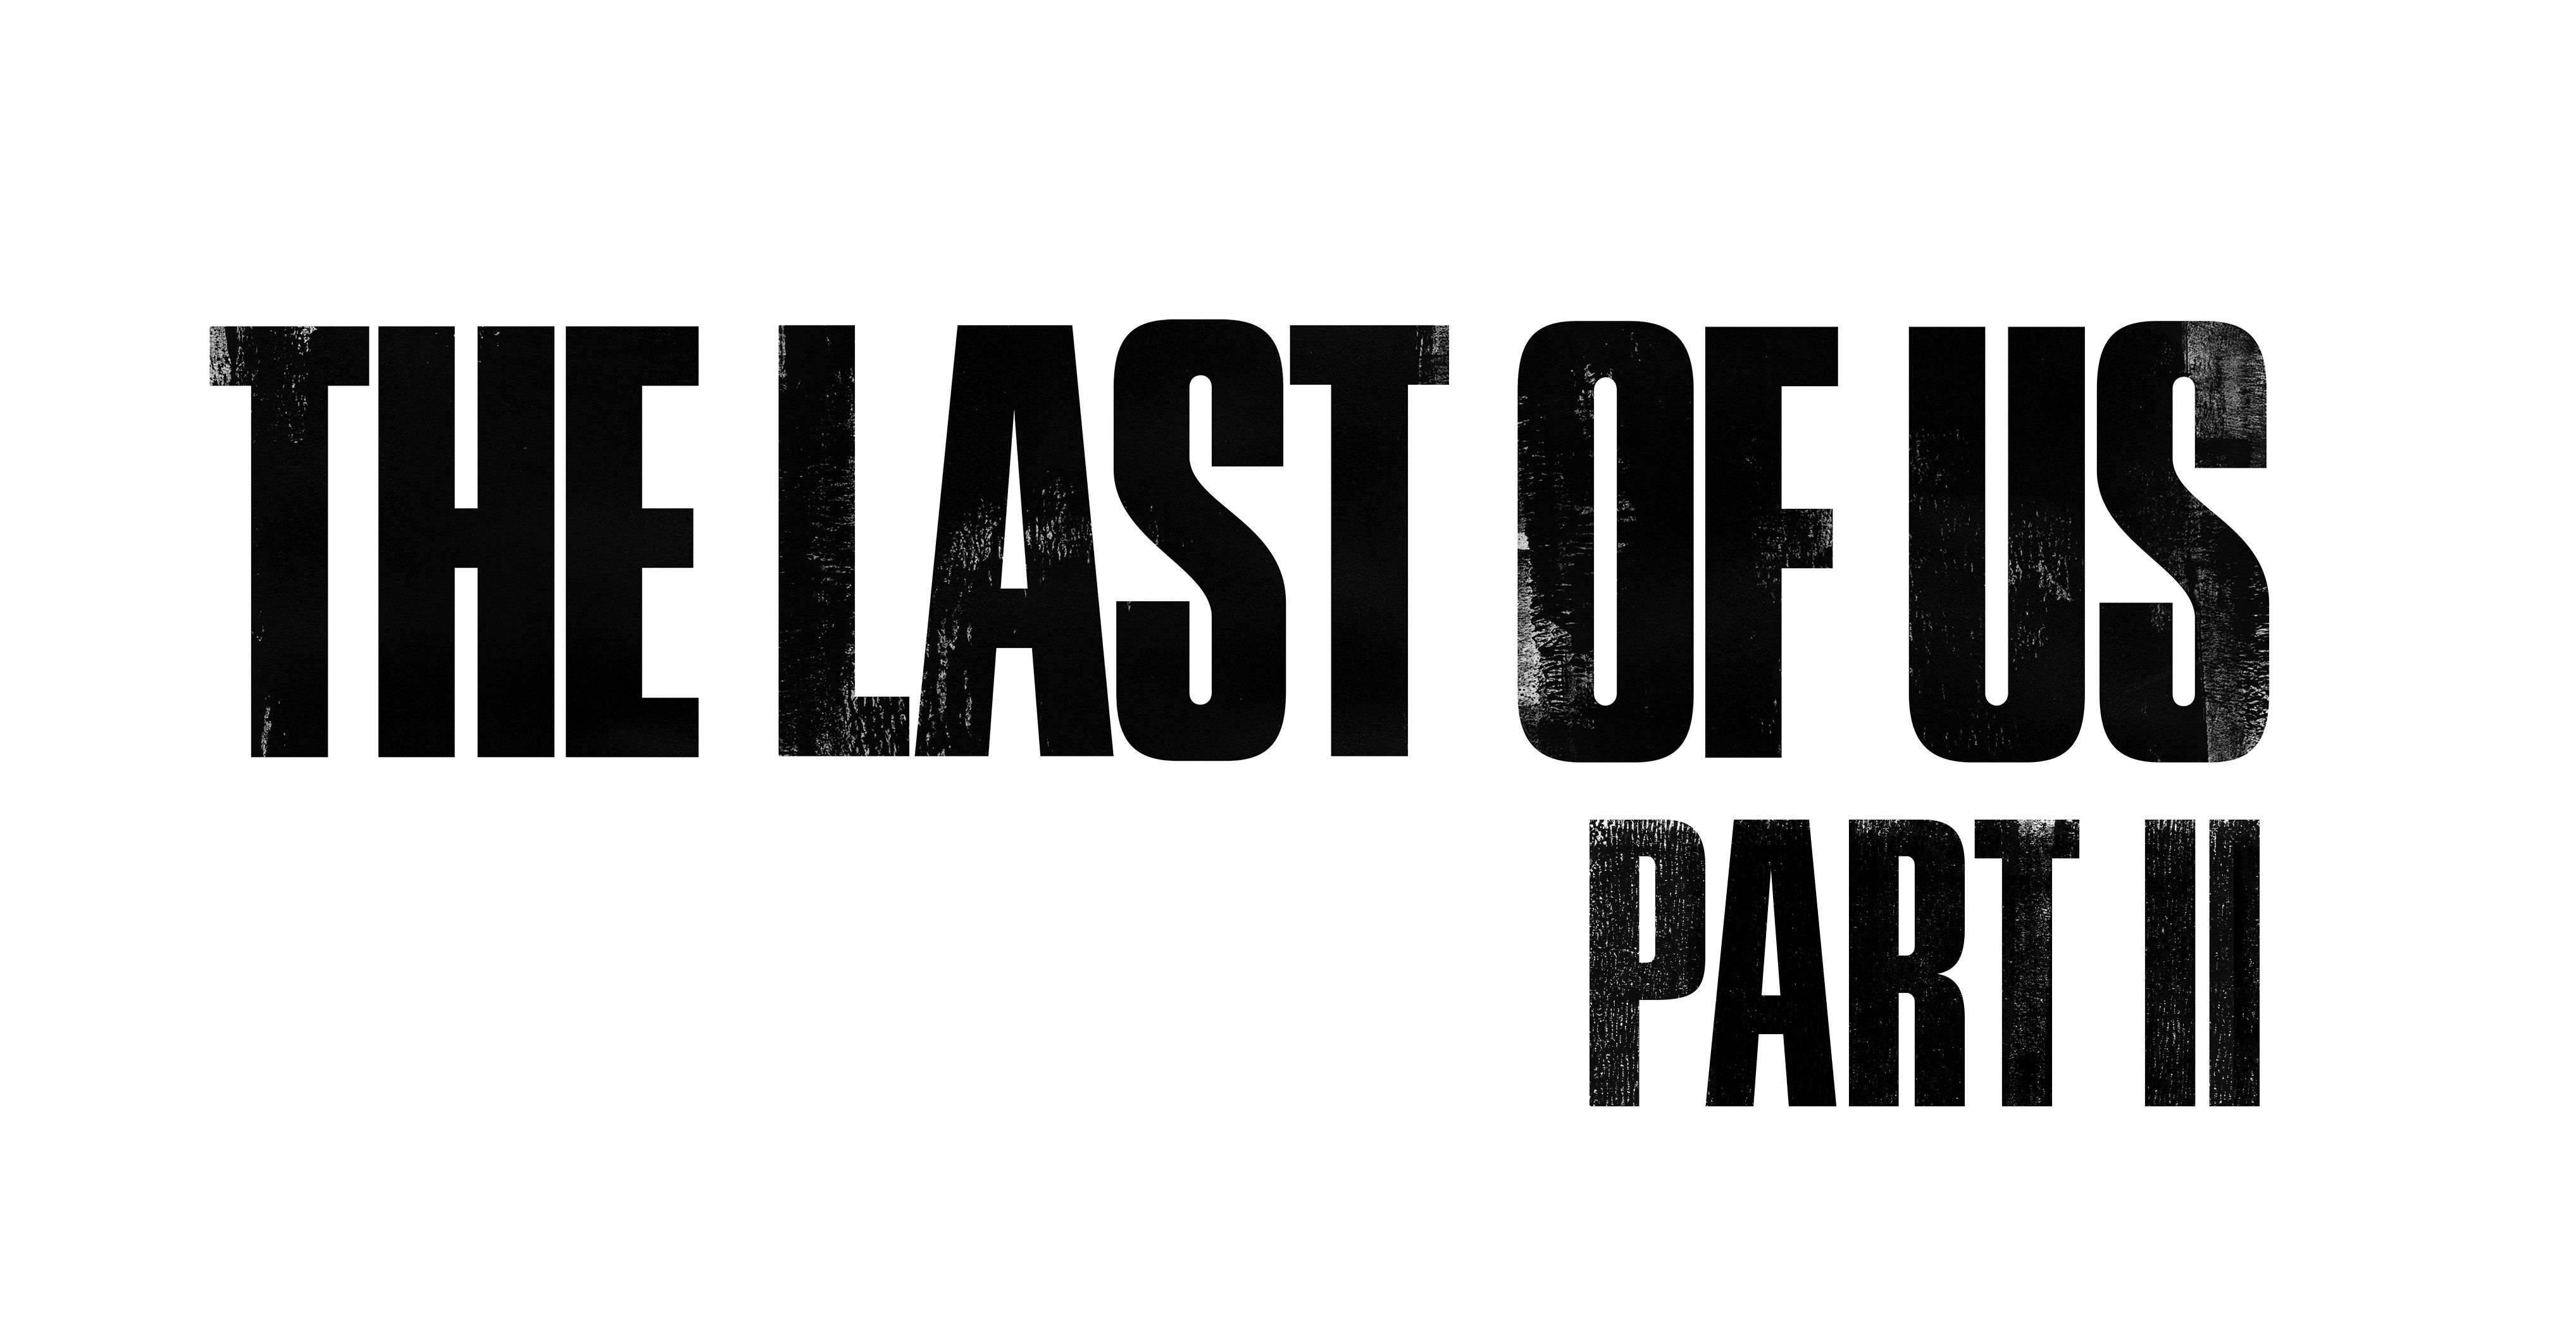 Inside The Last of Us Part II